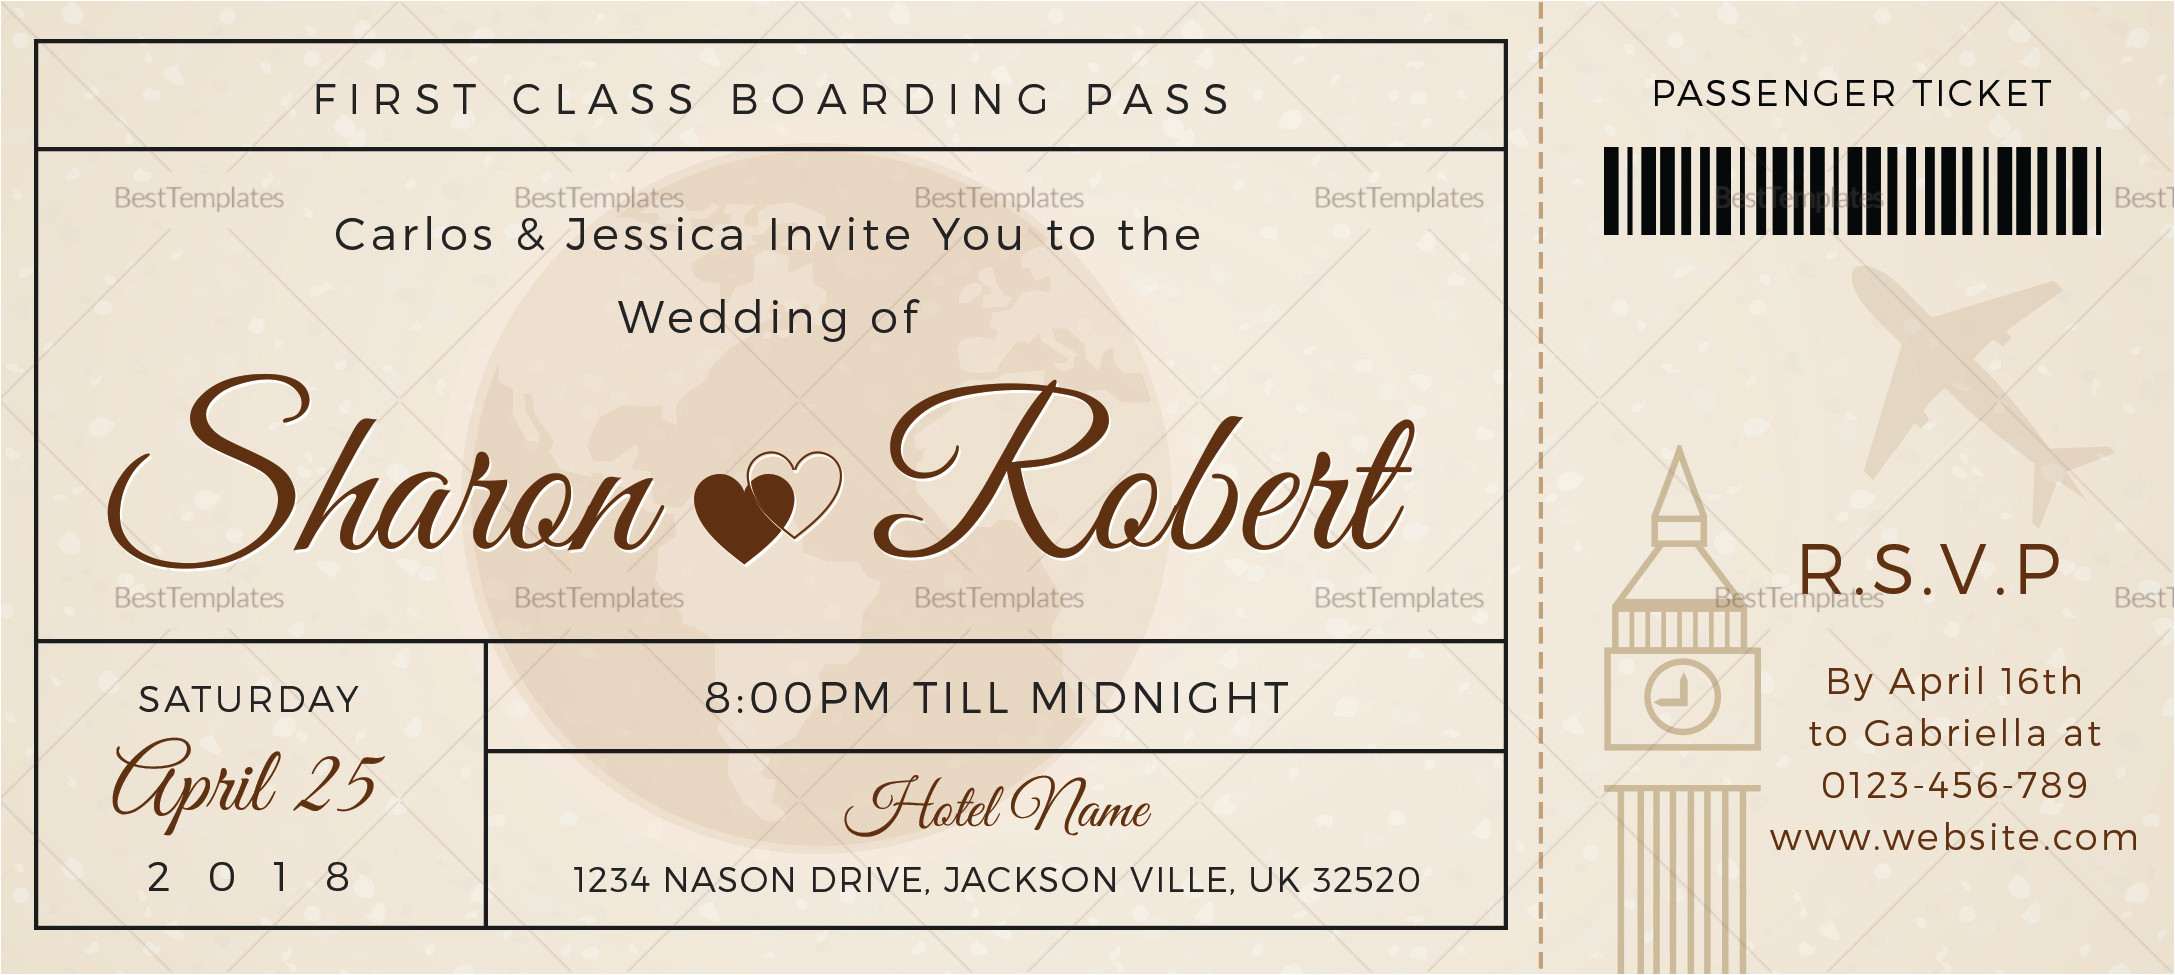 wedding boarding pass invitation ticket